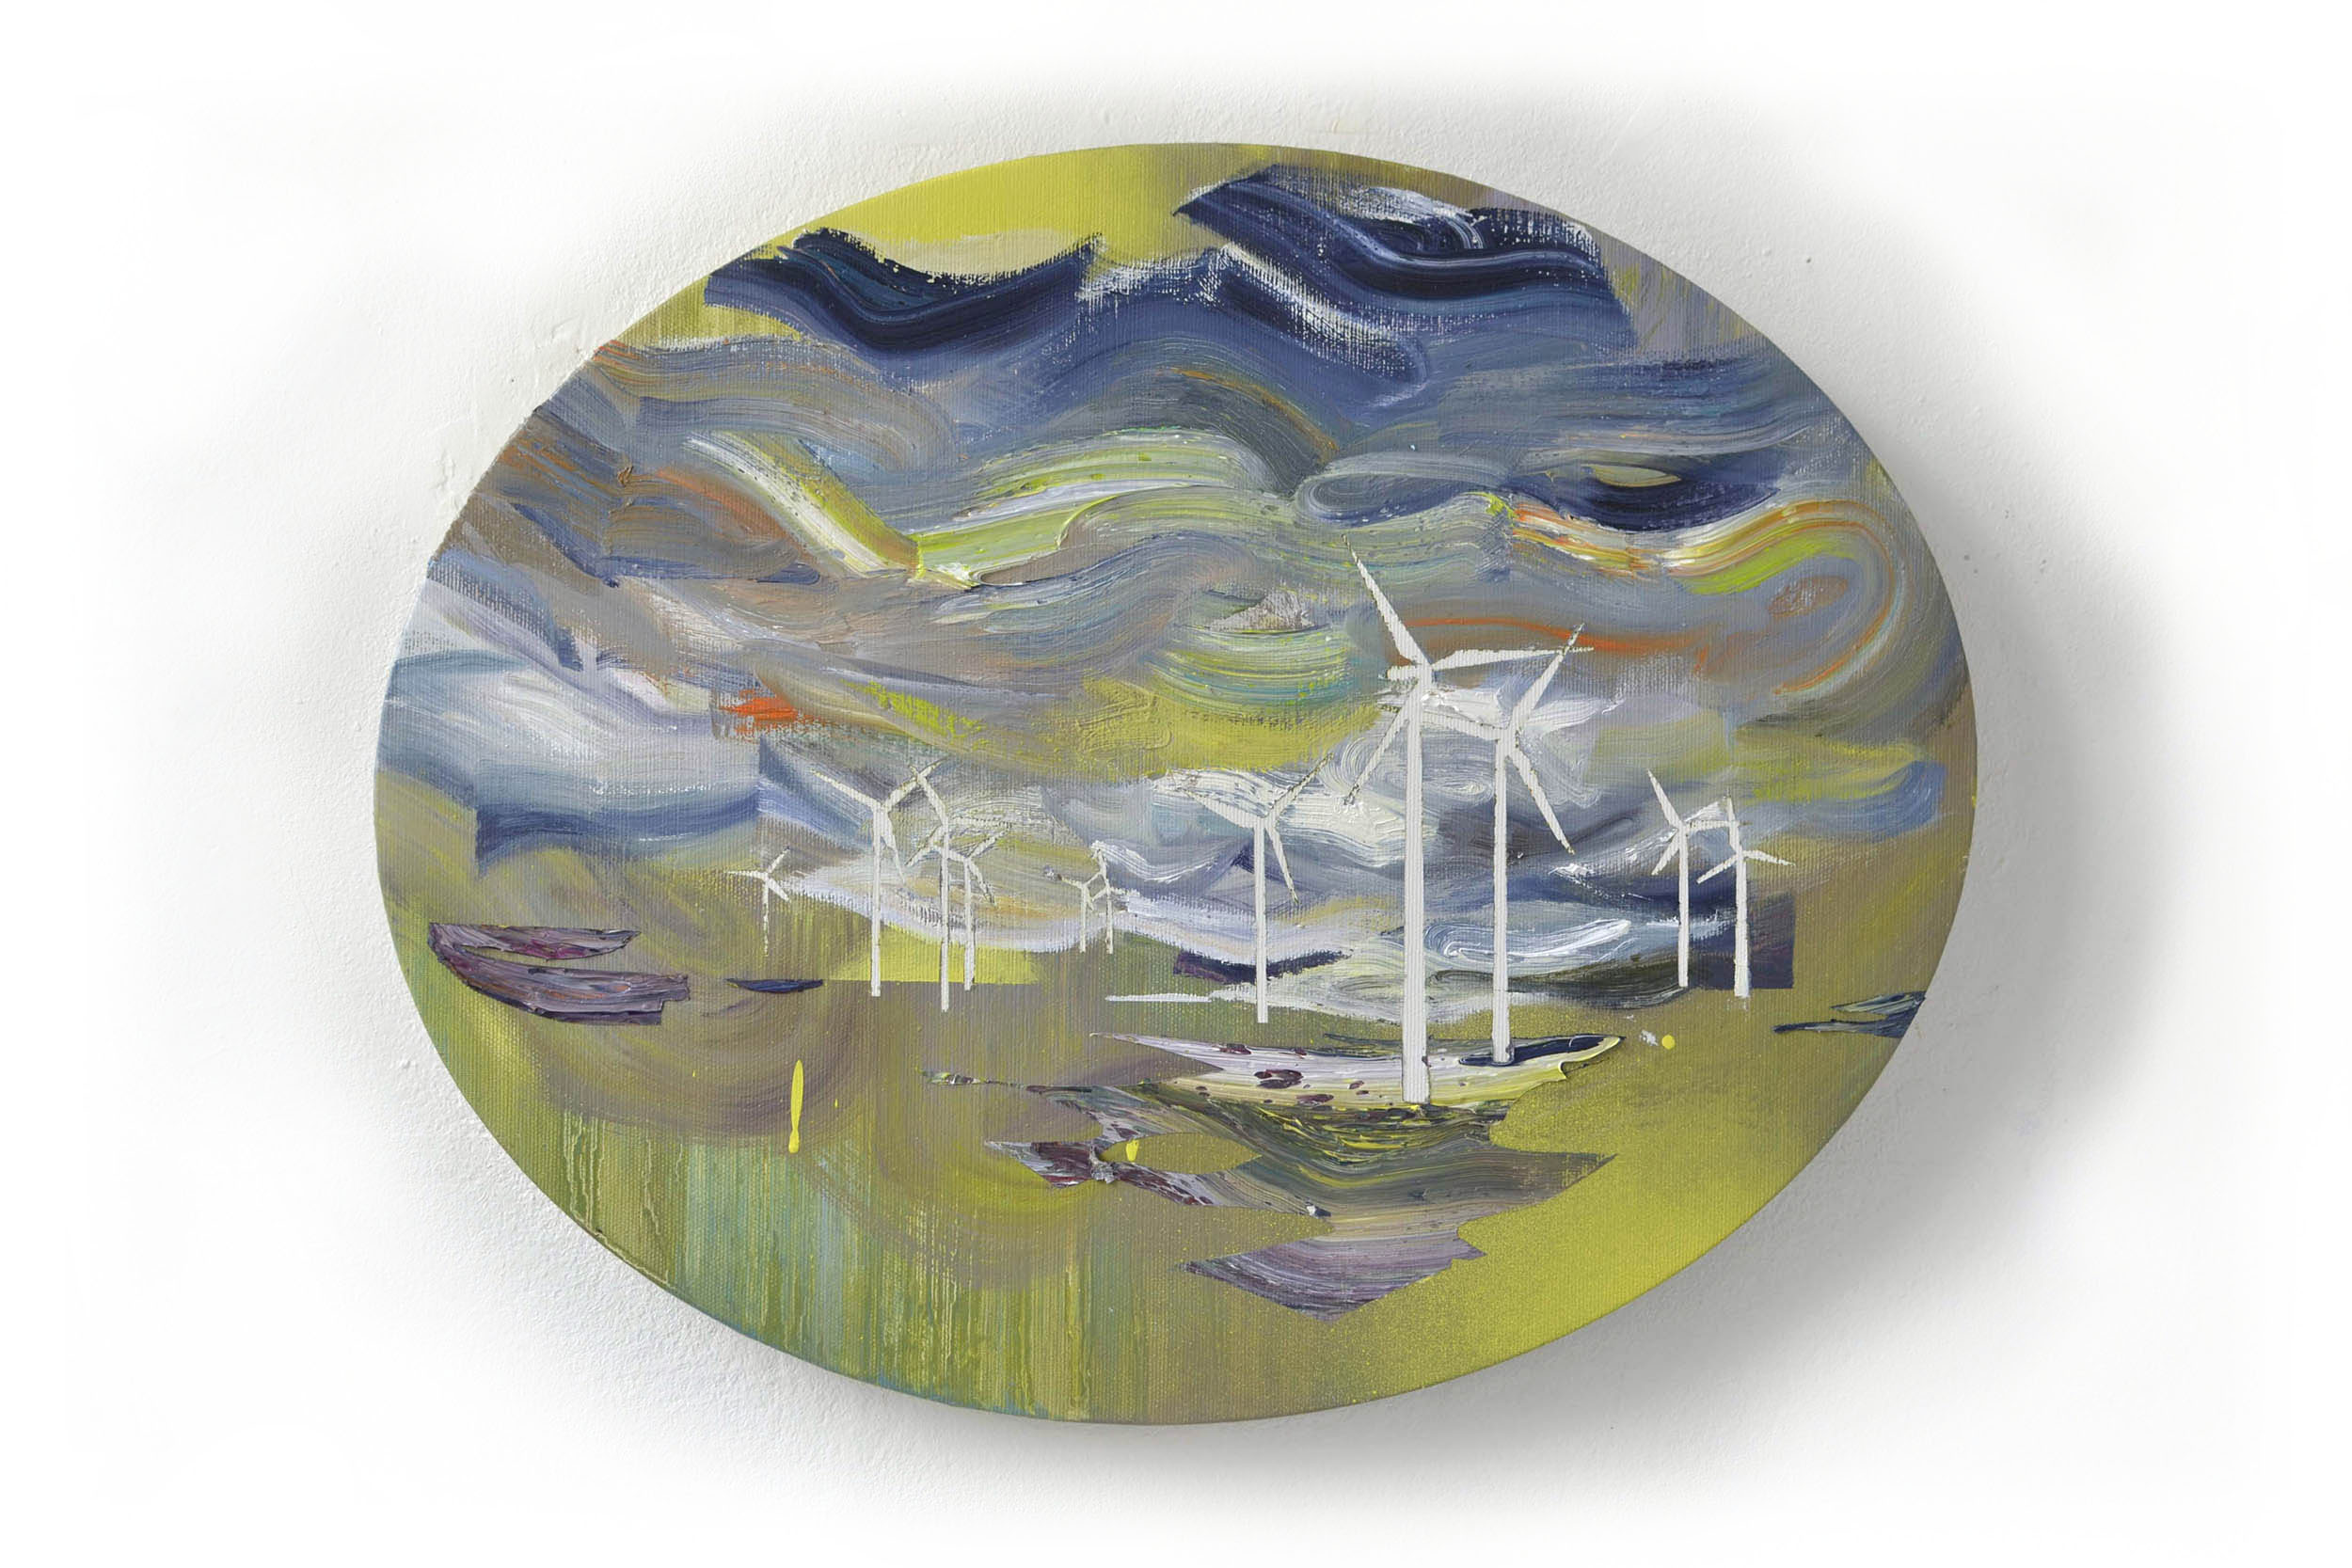   Fläming II  oil on canvas 40 x 50 cm, 2014 